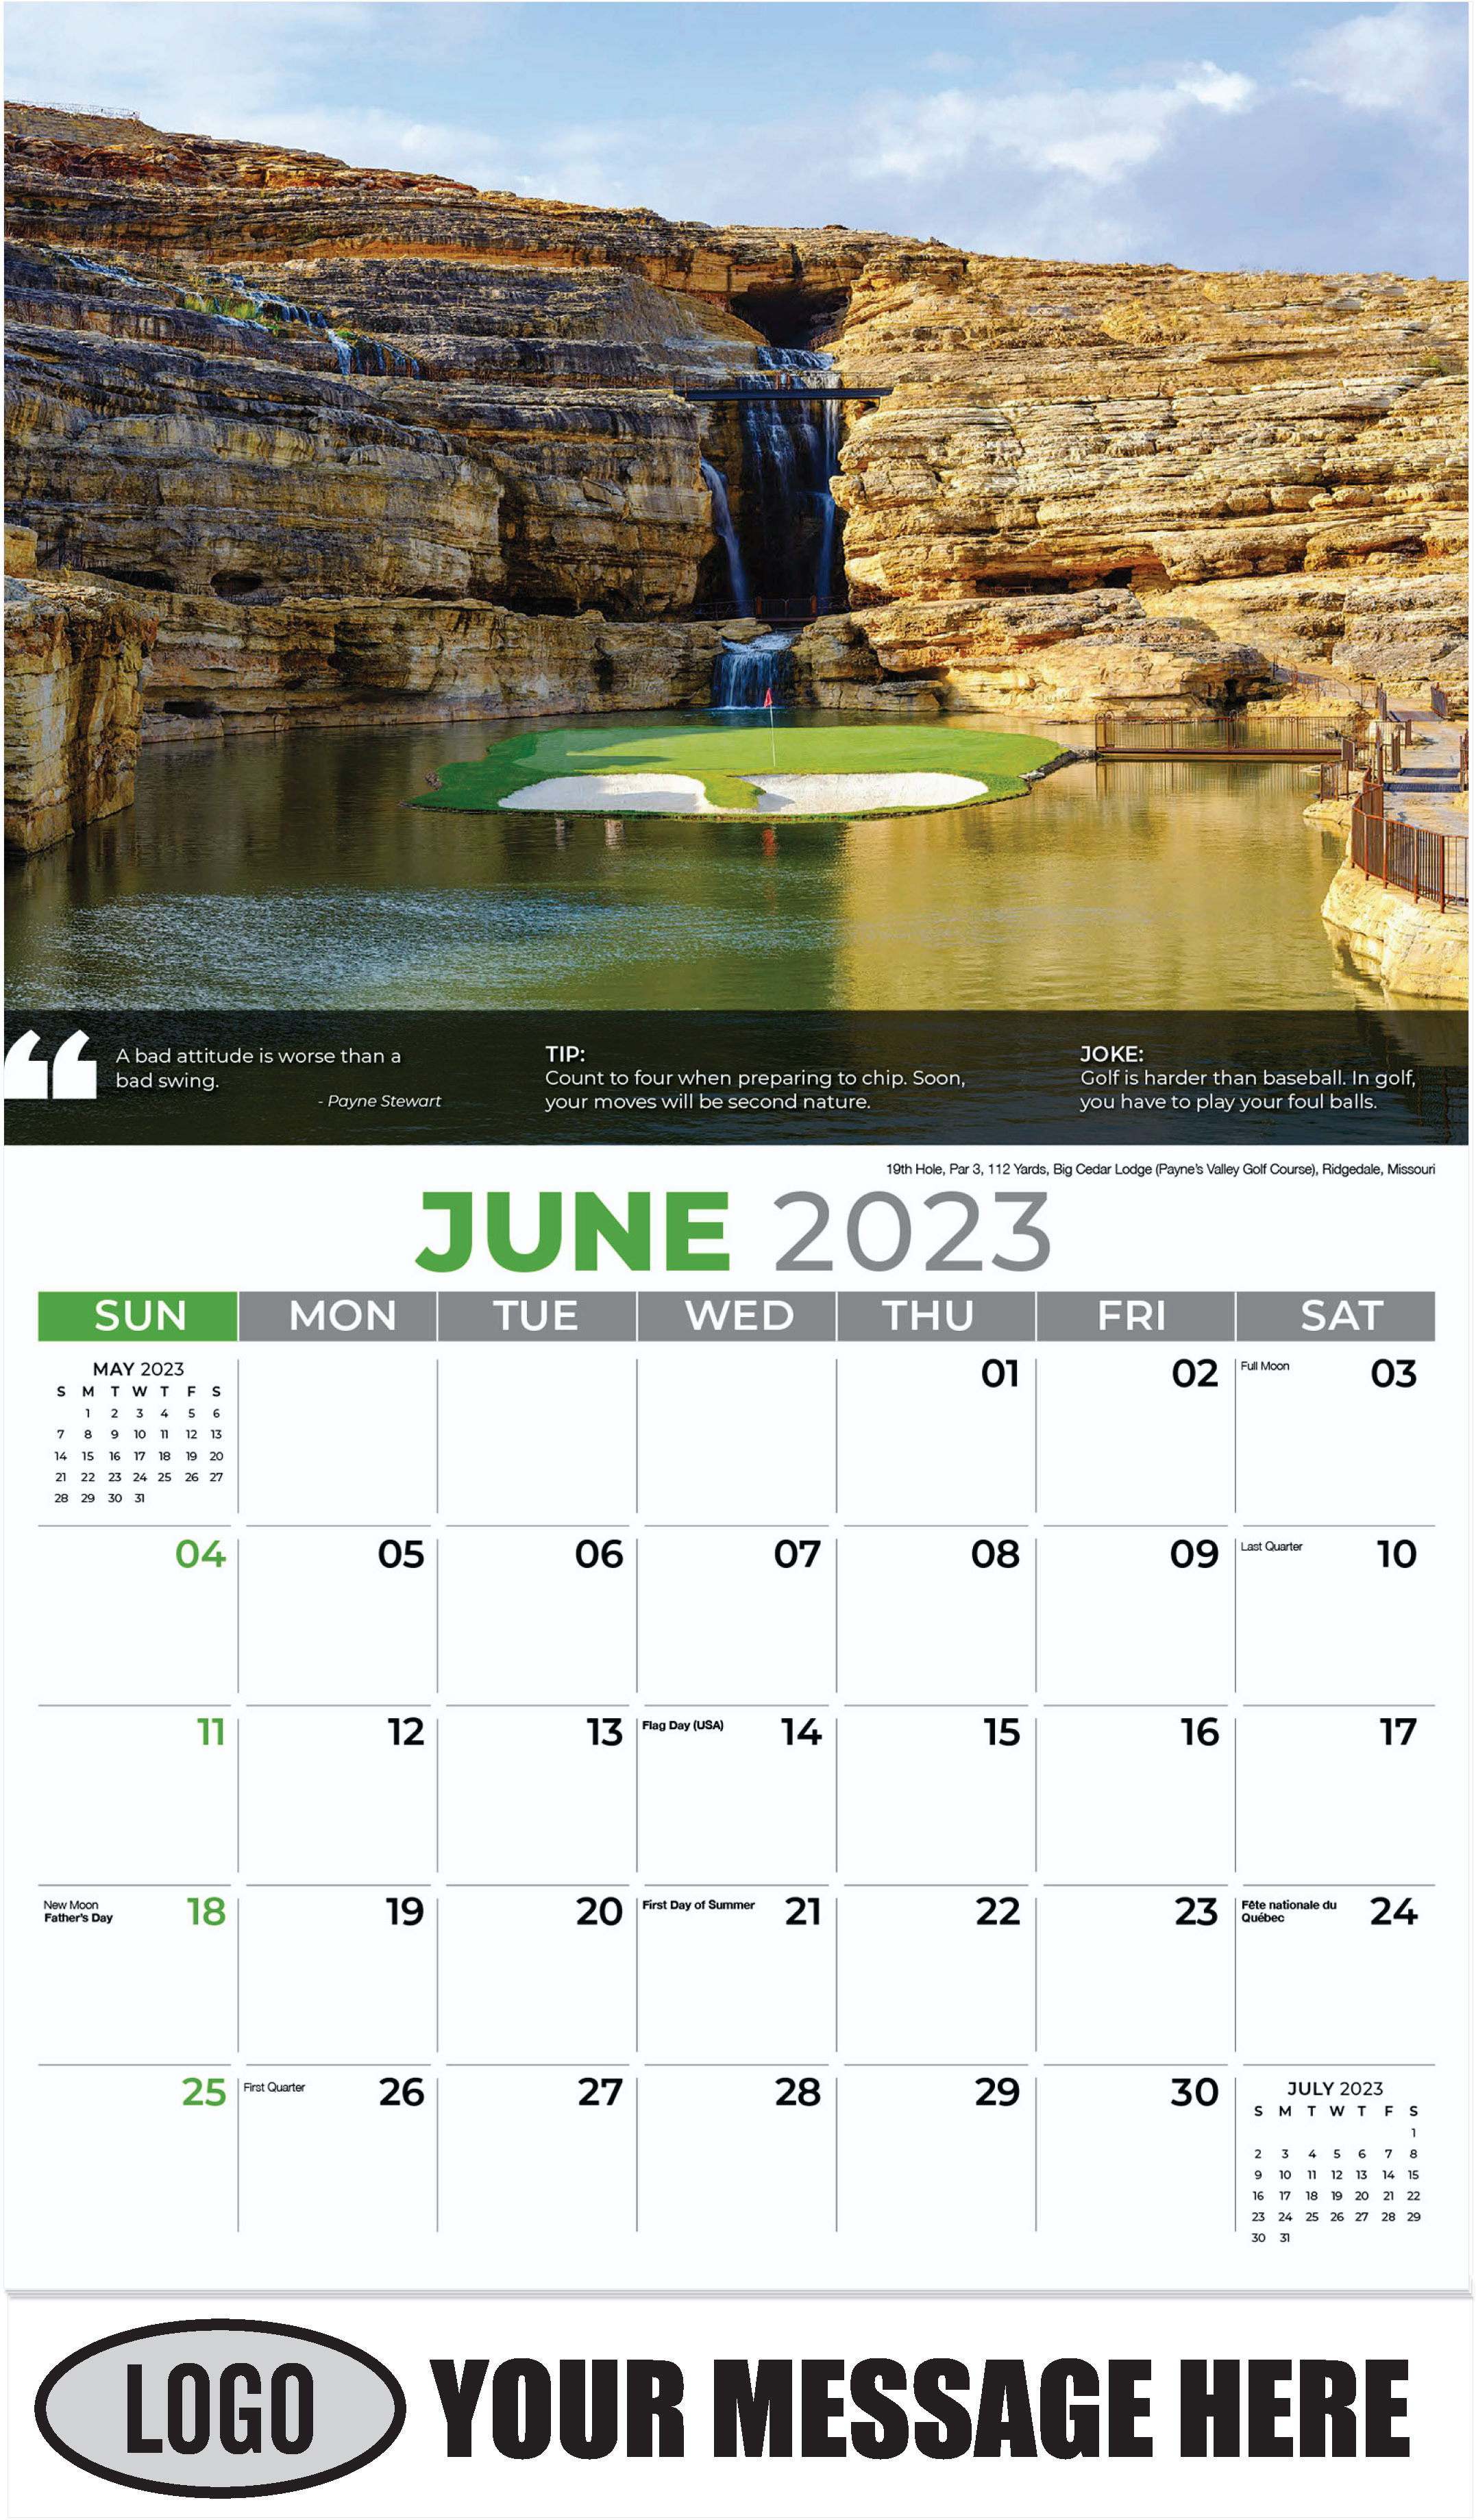 19th Hole, Par 3, 112 Yards, Big Cedar Lodge (Payne’s Valley Golf Course), Ridgedale, Missouri - June - Golf Tips  (Tips, Quips and Holes) 2023 Promotional Calendar